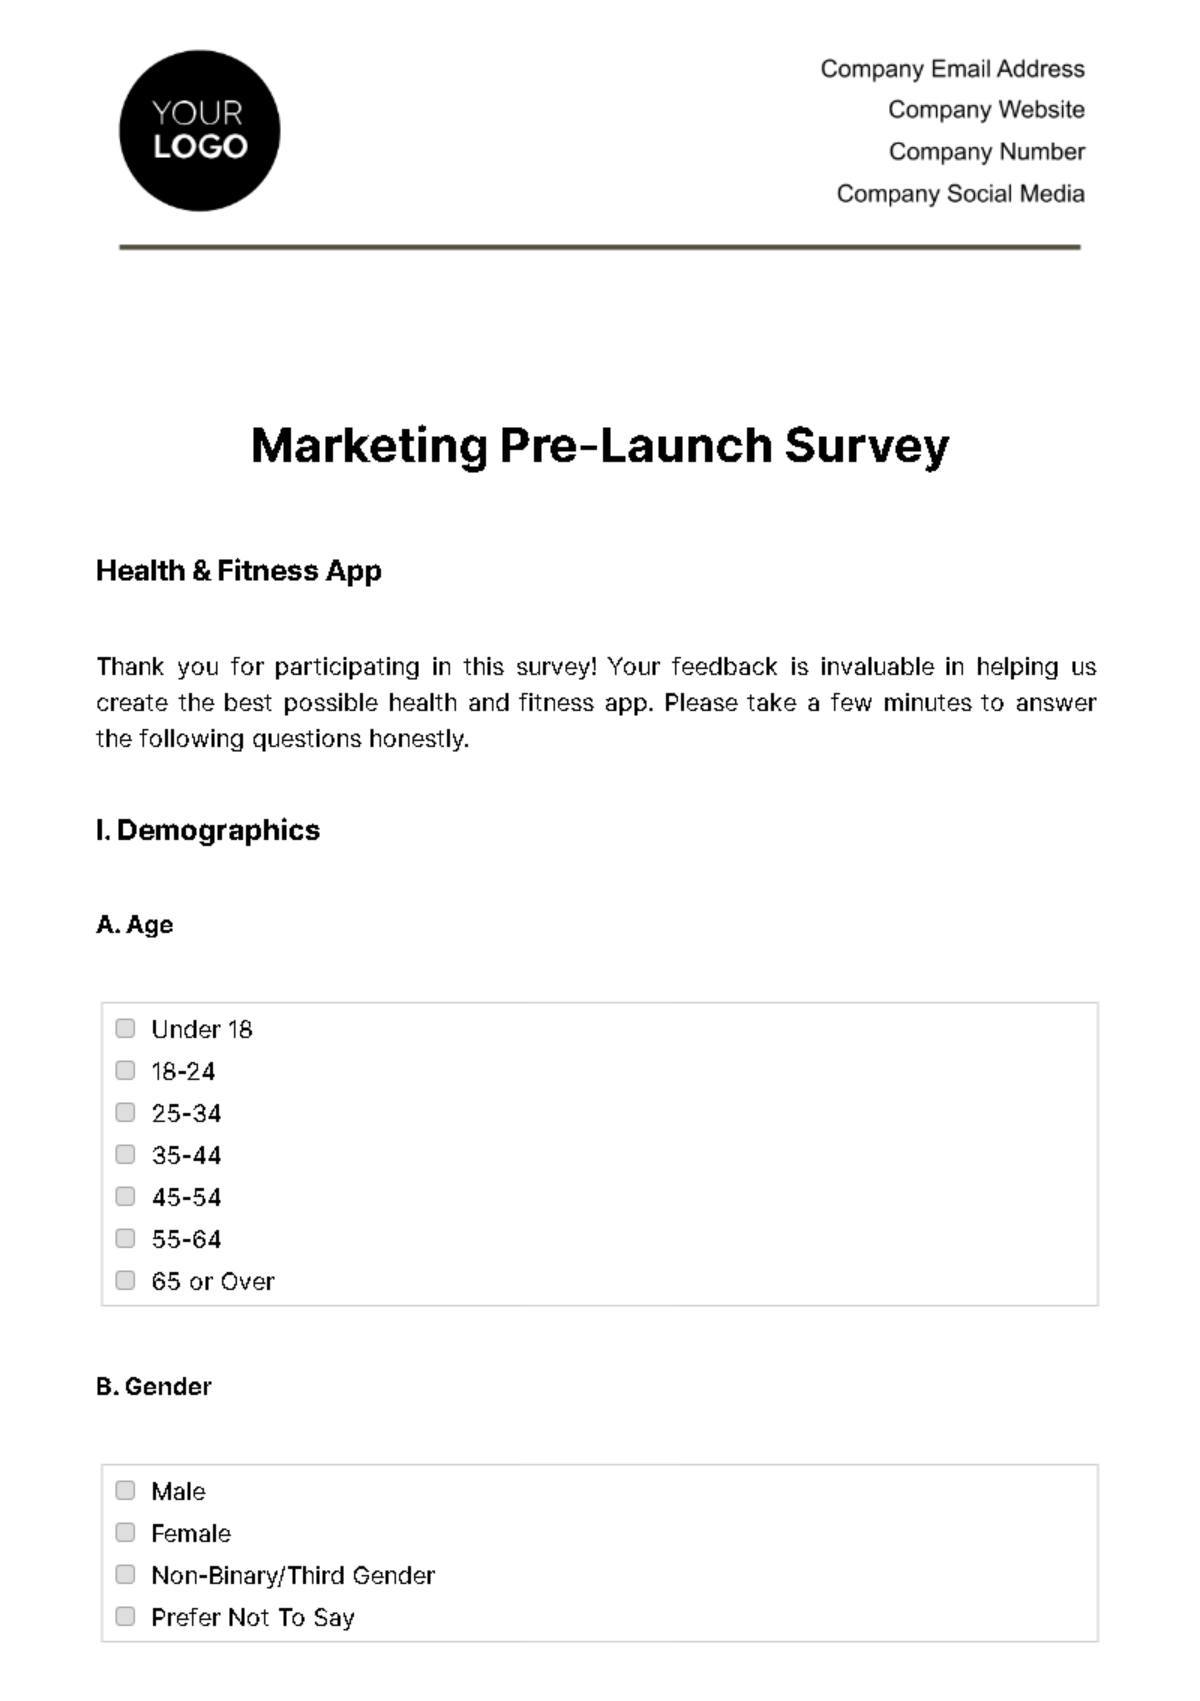 Marketing Pre-launch Survey Template